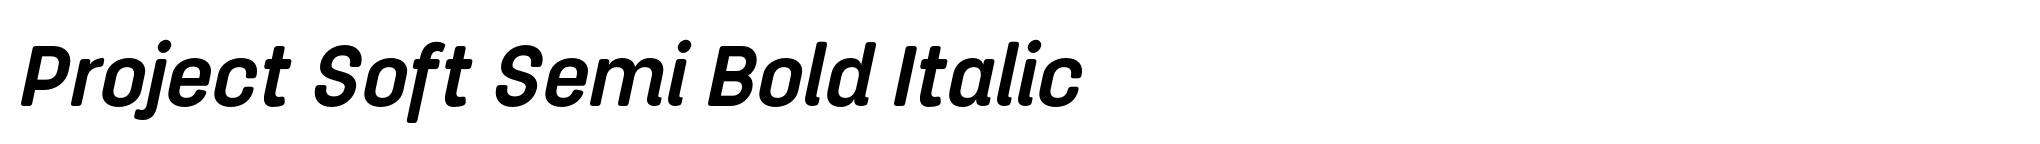 Project Soft Semi Bold Italic image